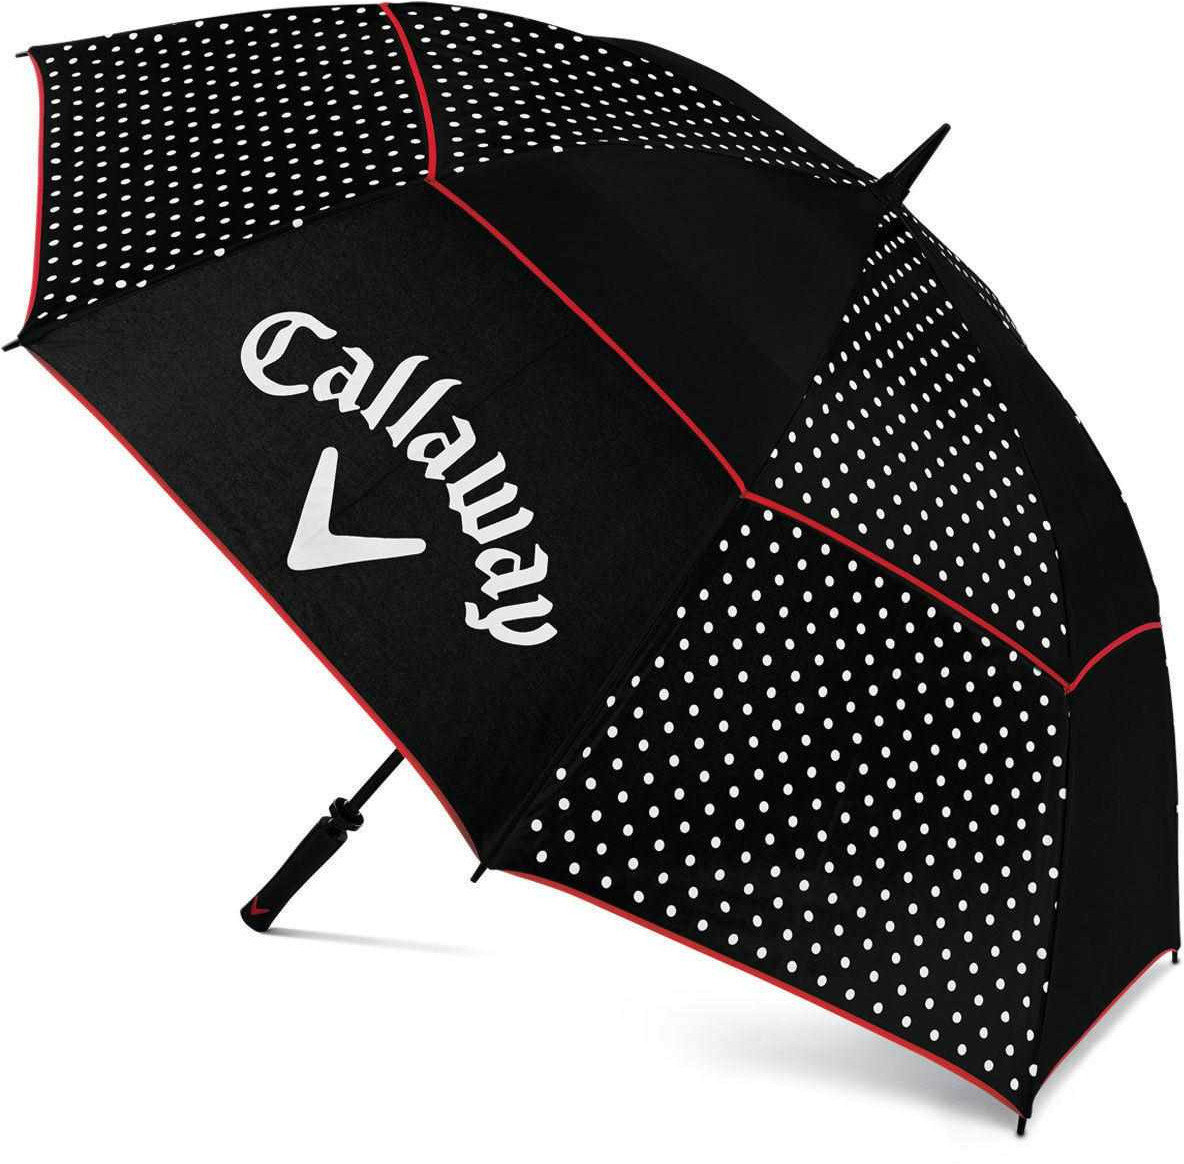 Parapluie Callaway Umbrella Blk/Wht